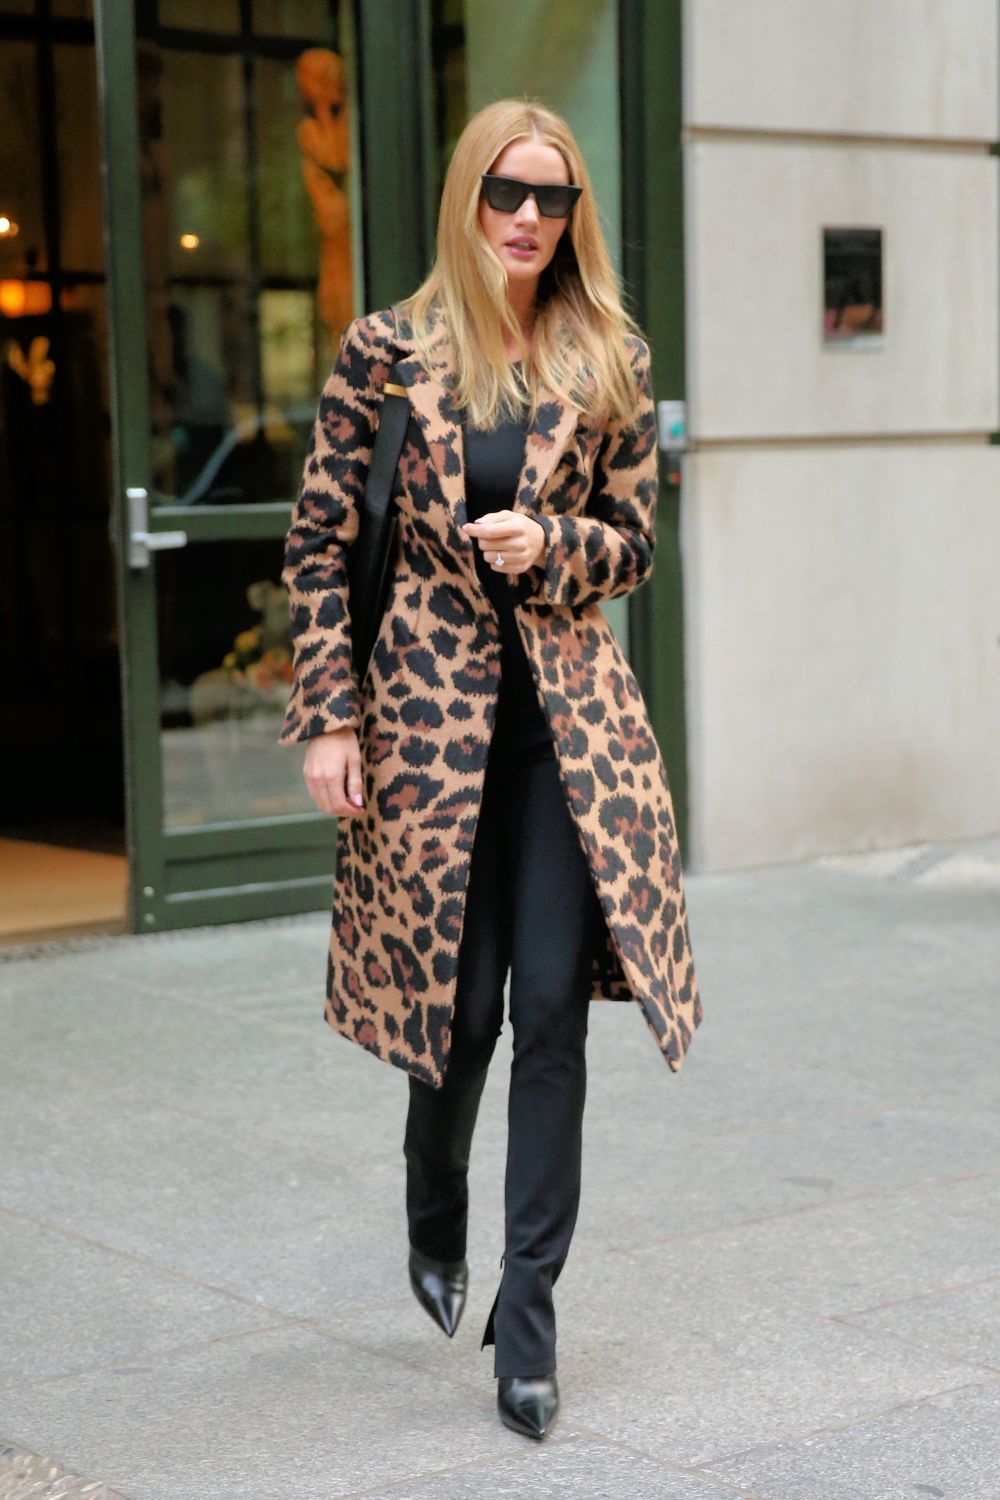 Rosie Huntington con abrigo de leopardo.